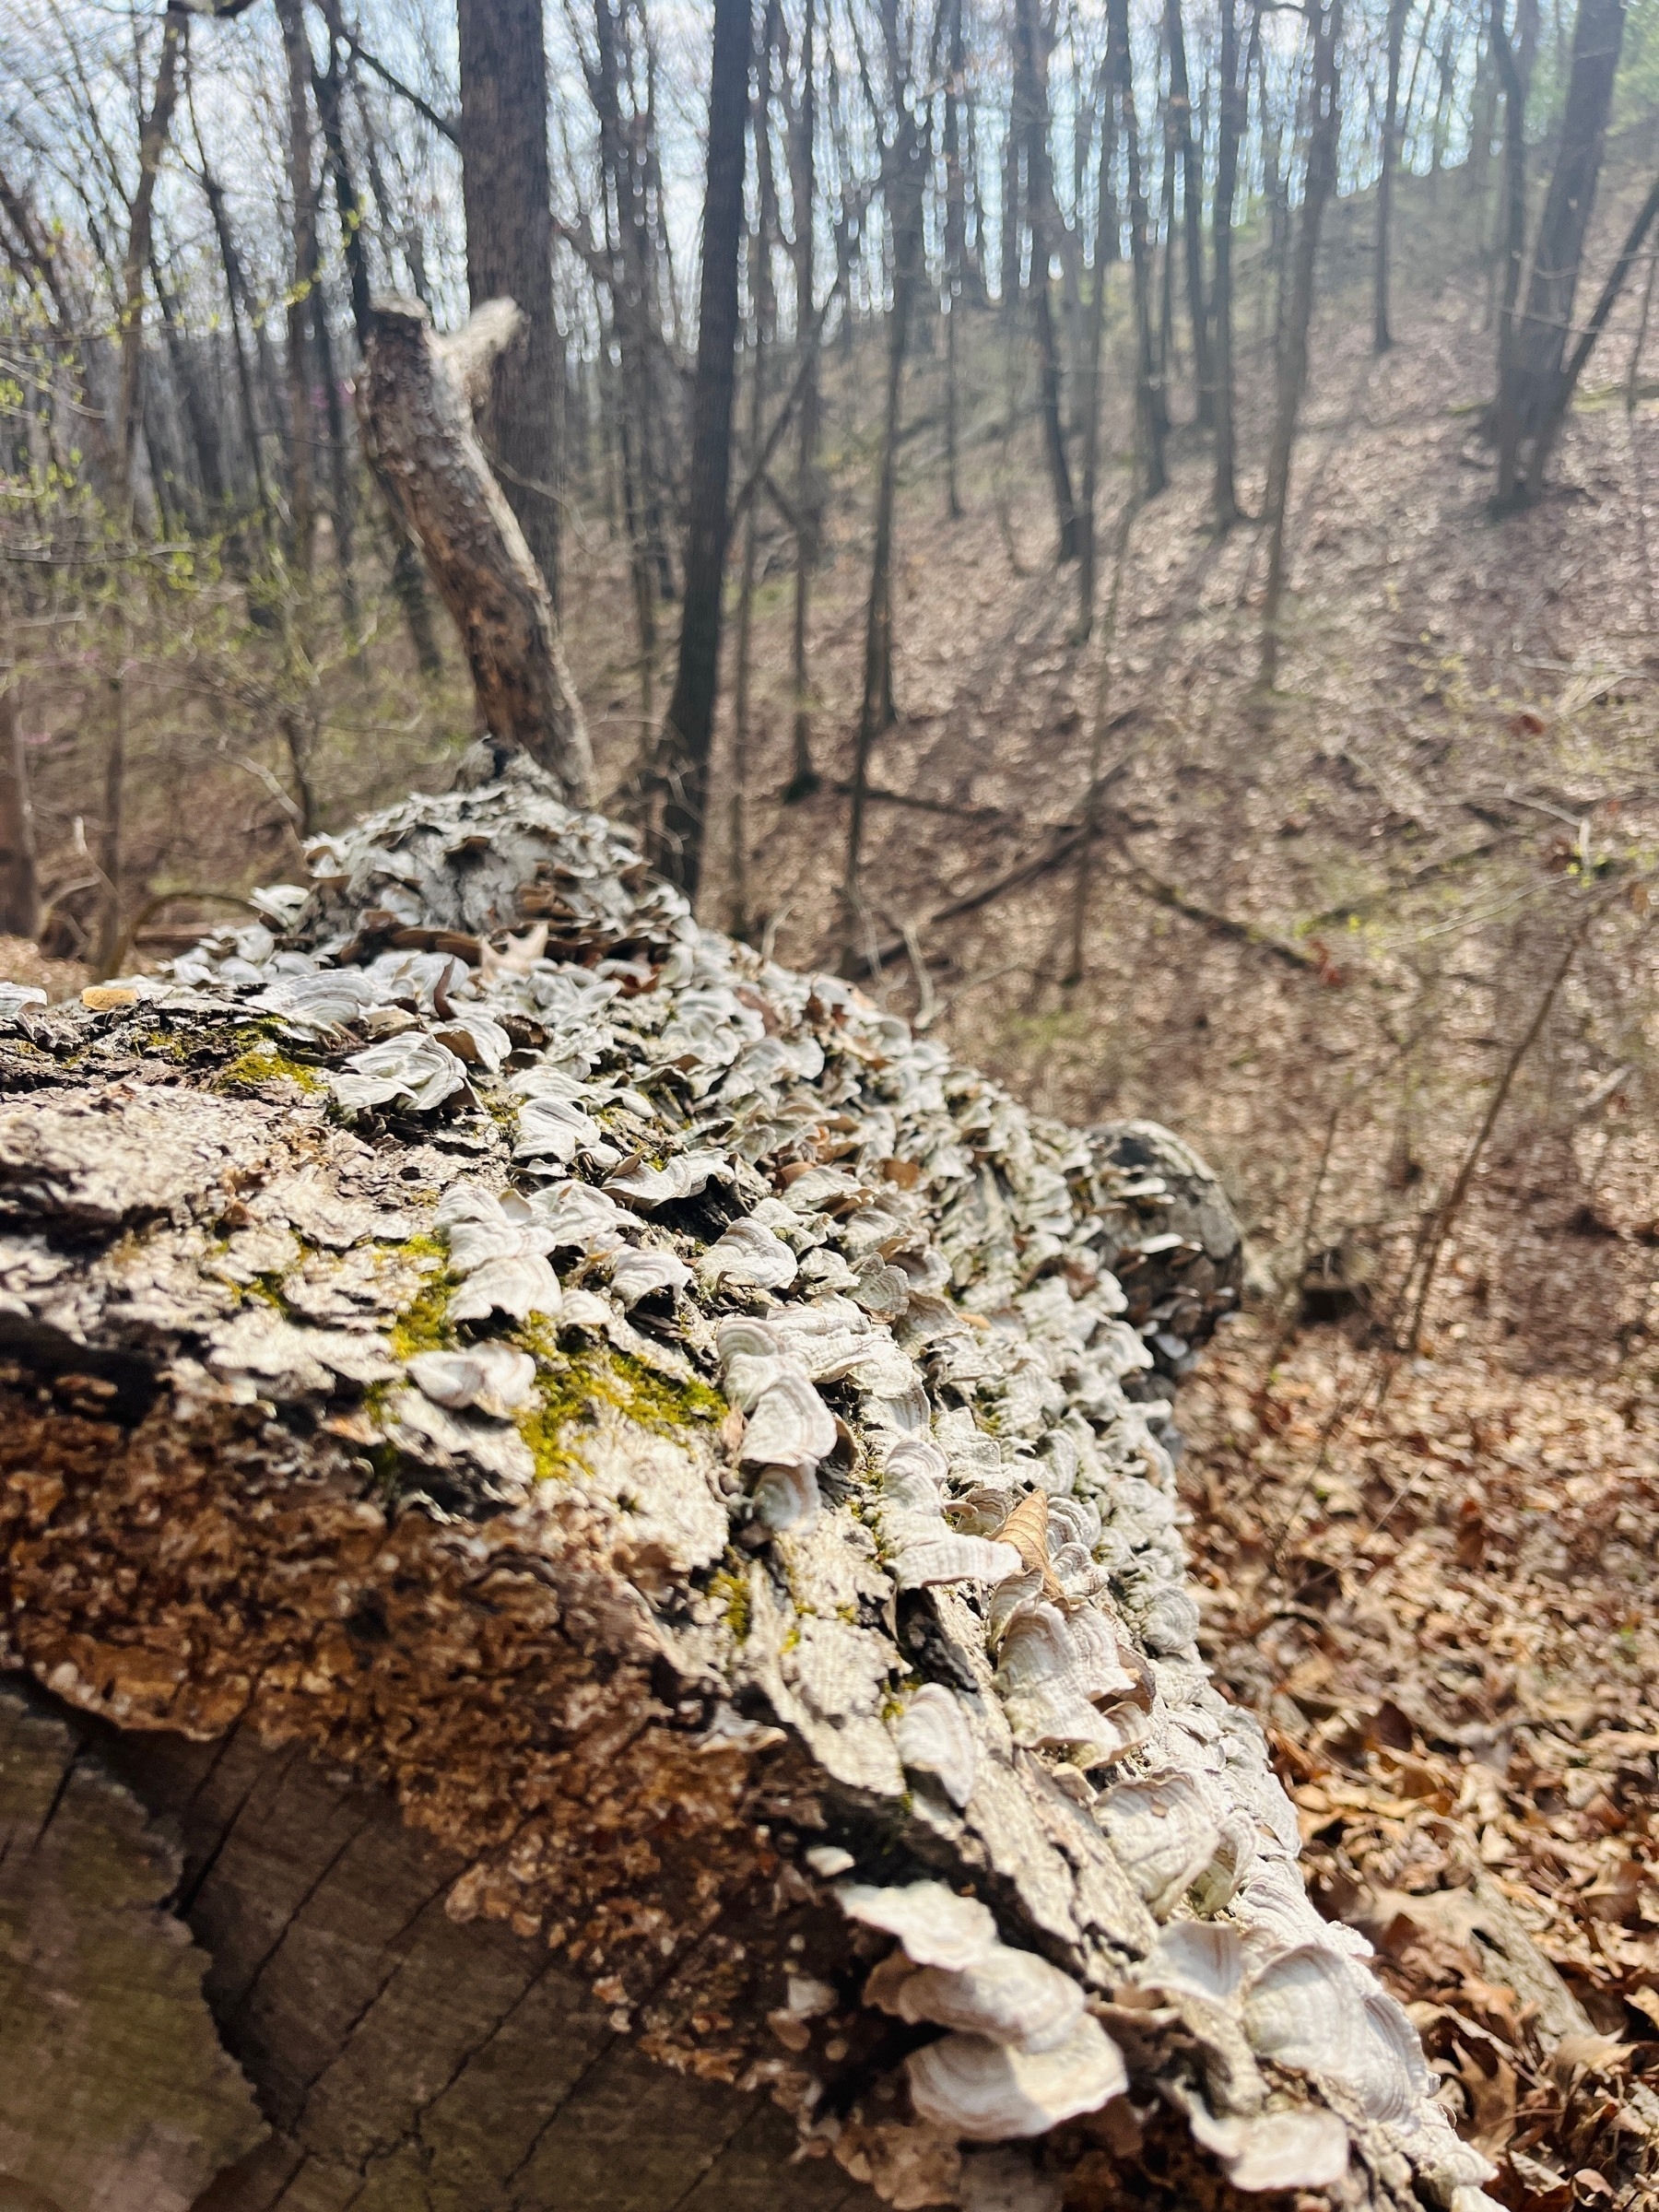 A closeup view of a fallen log covered in lichen